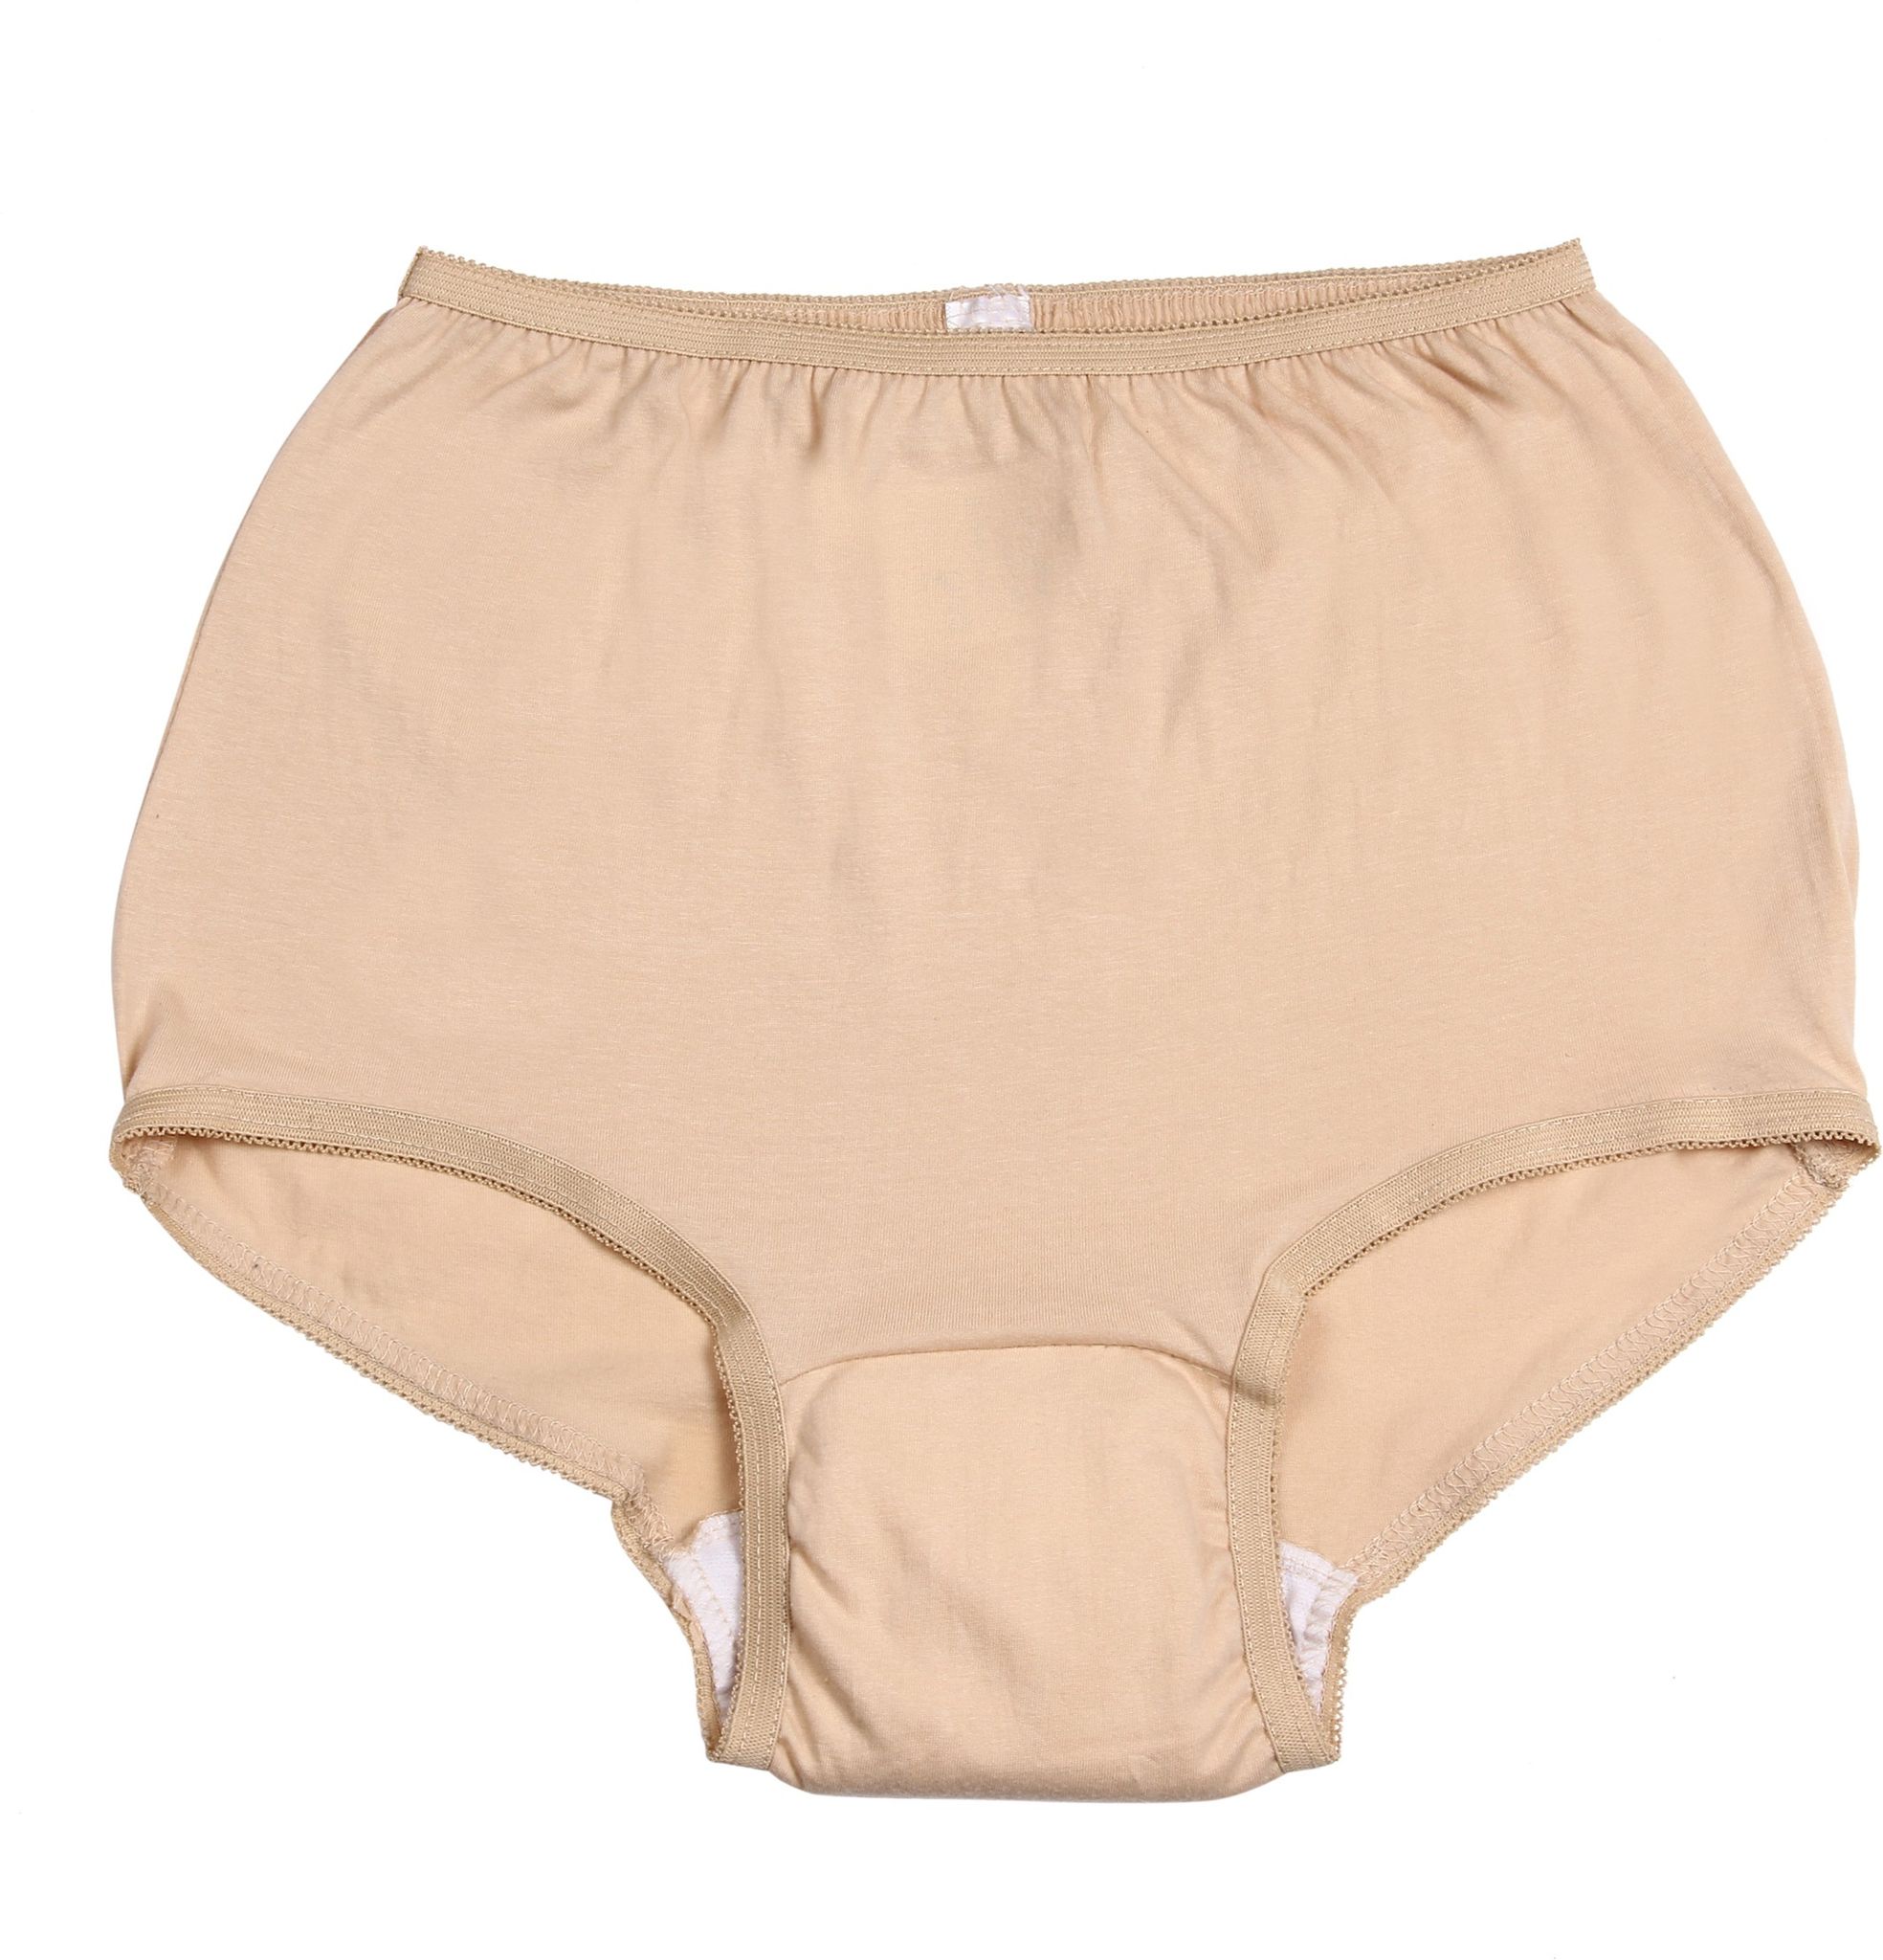 Wemyc Incontinence Underwear For Women I Washable & Reusable I Absorbs  Medium Urine Leaks I Adult